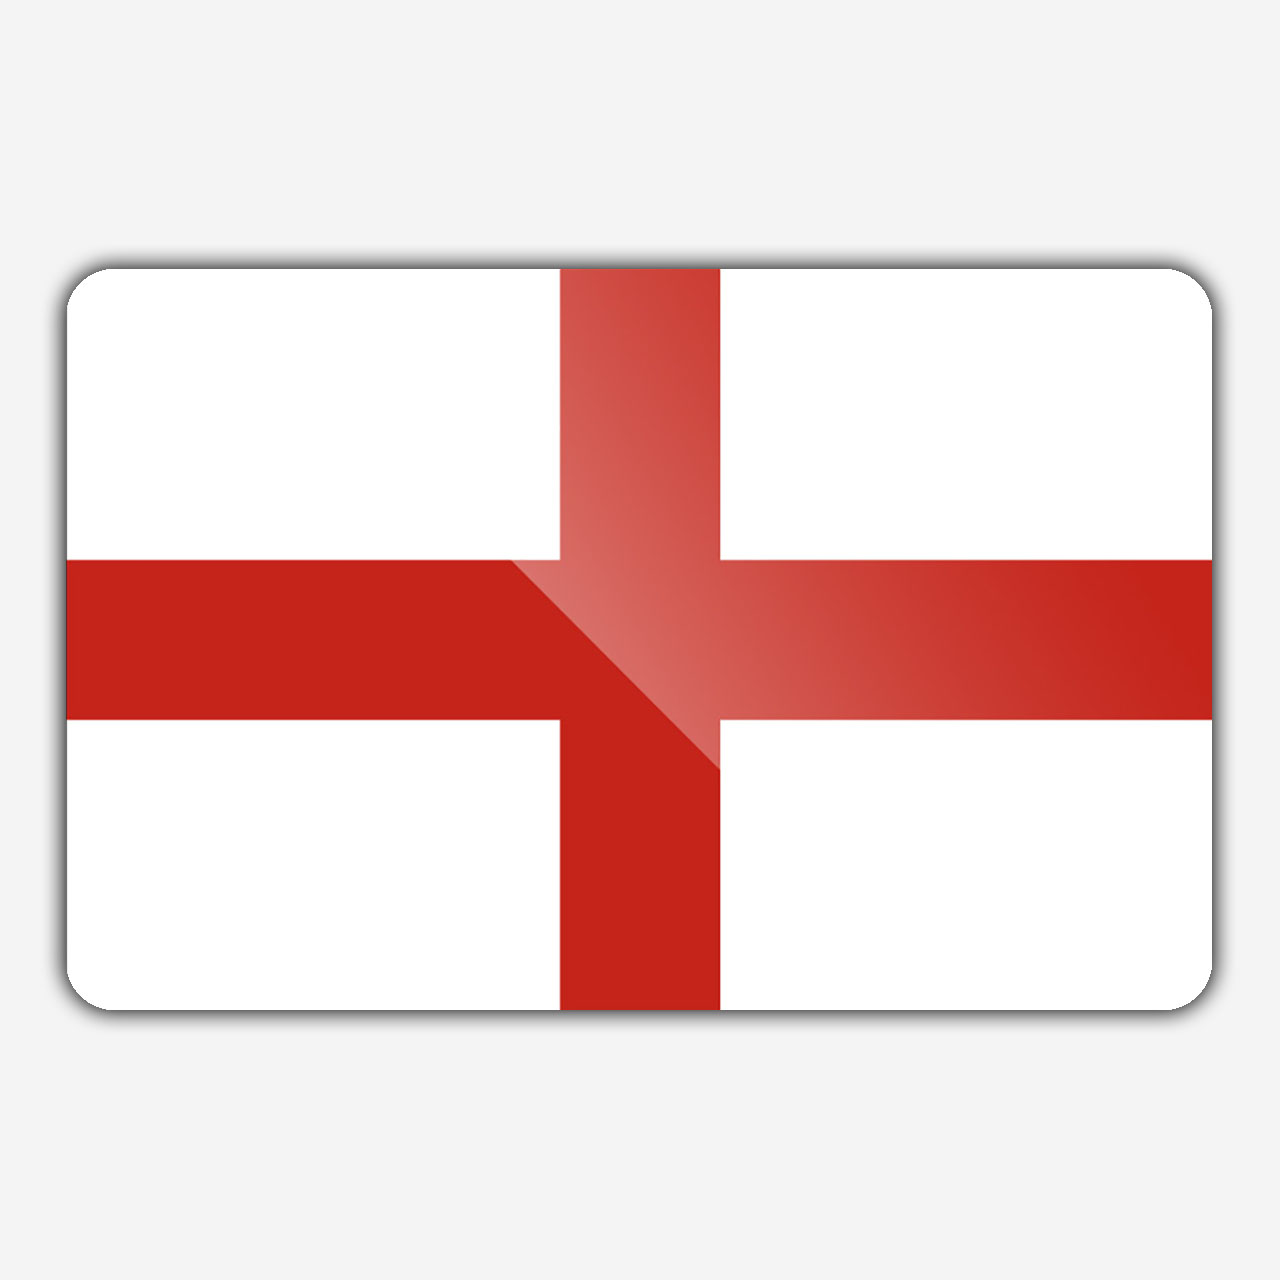 Brig achterstalligheid Verslagen Engelse vlag kopen? | Snelle levering & 8.7 klantbeoordeling | Vlaggen.com